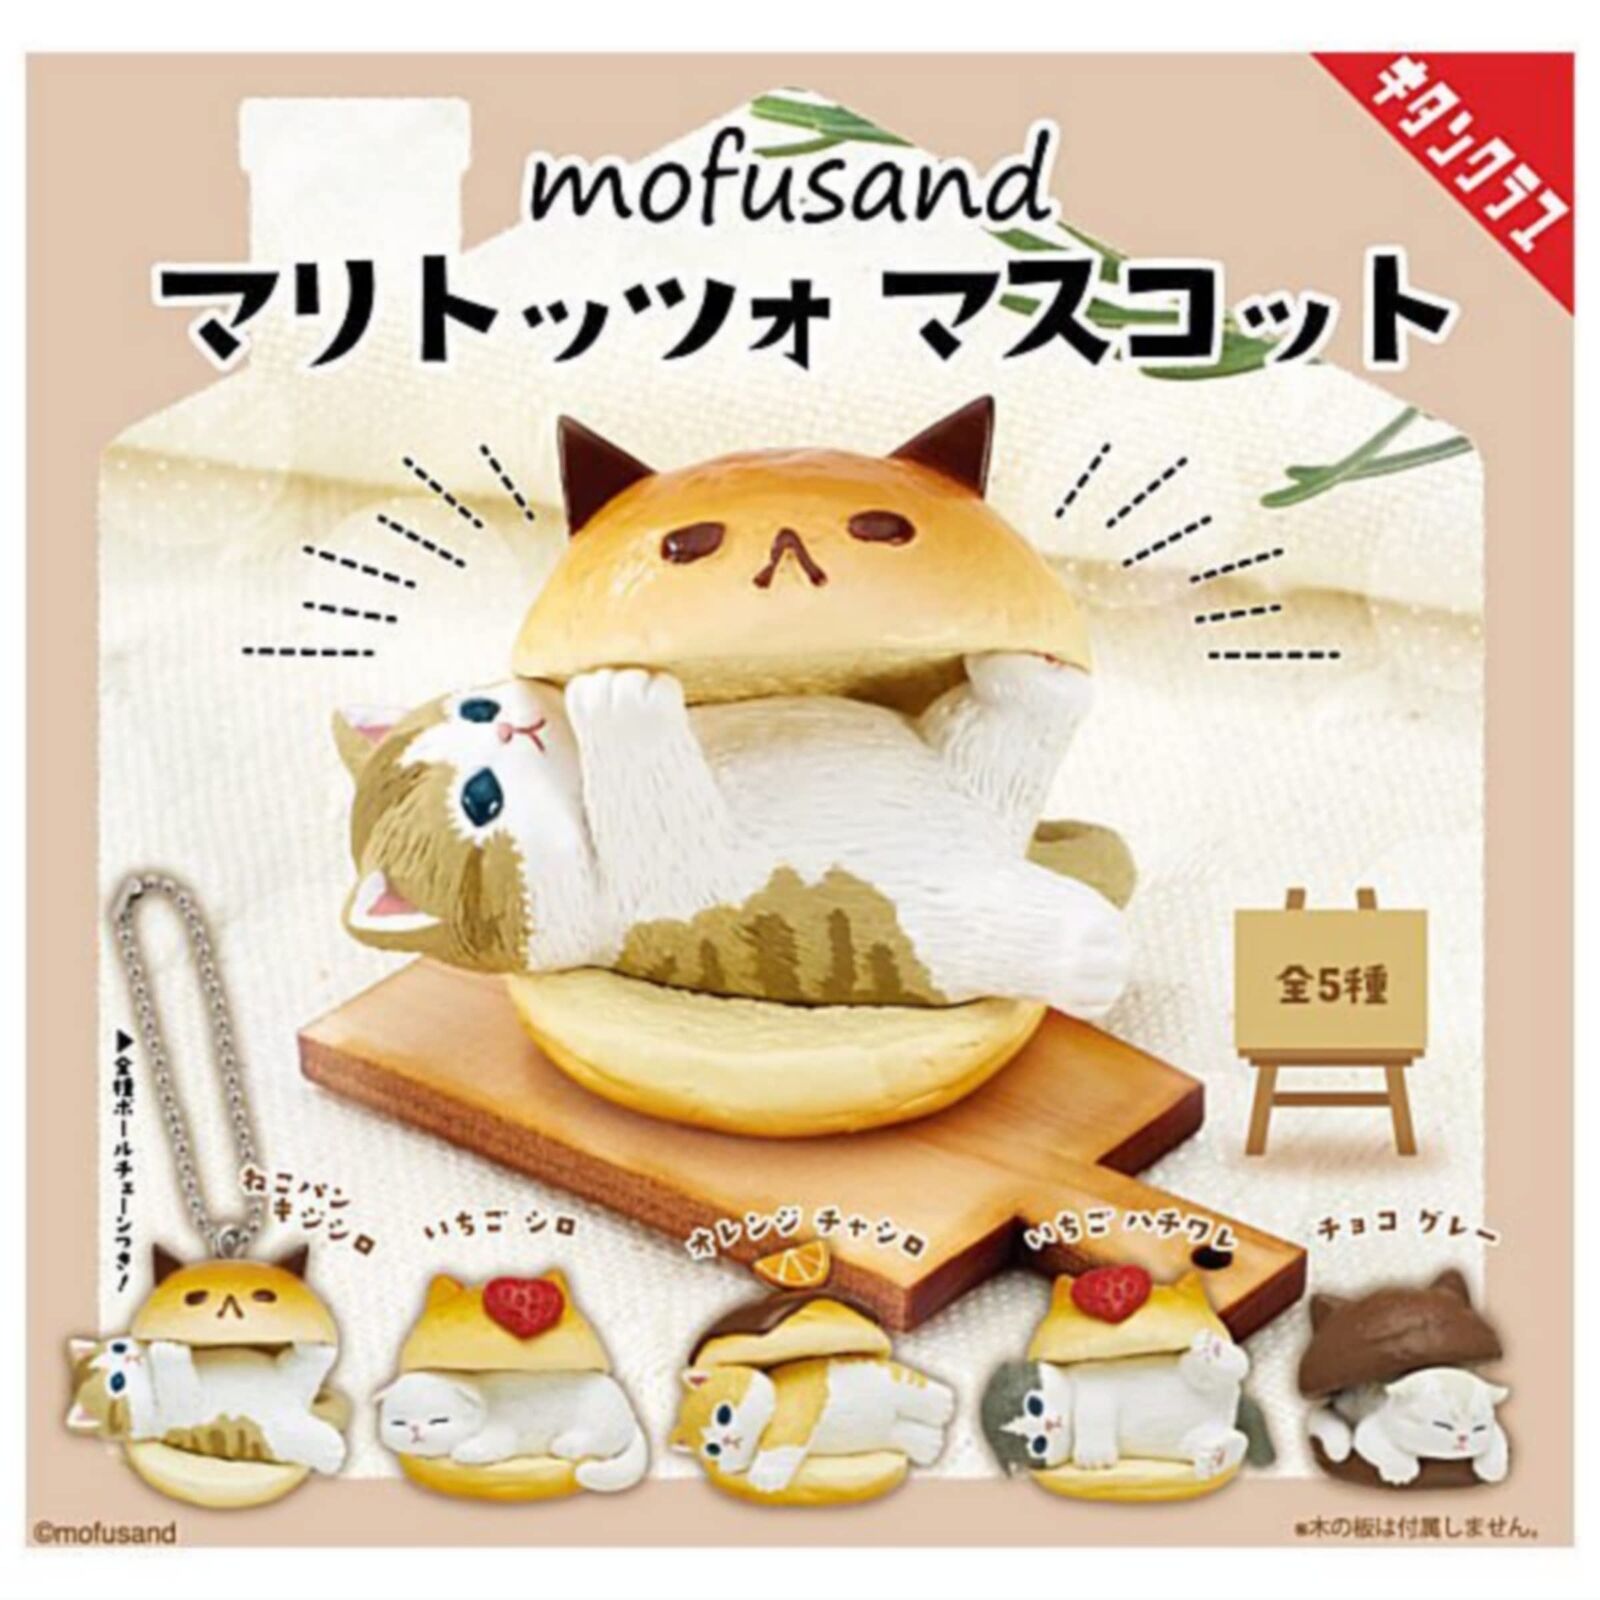 (Capsule toy) Cat mofusand Maritozzo Mascot [all 5 sets (Full set)]